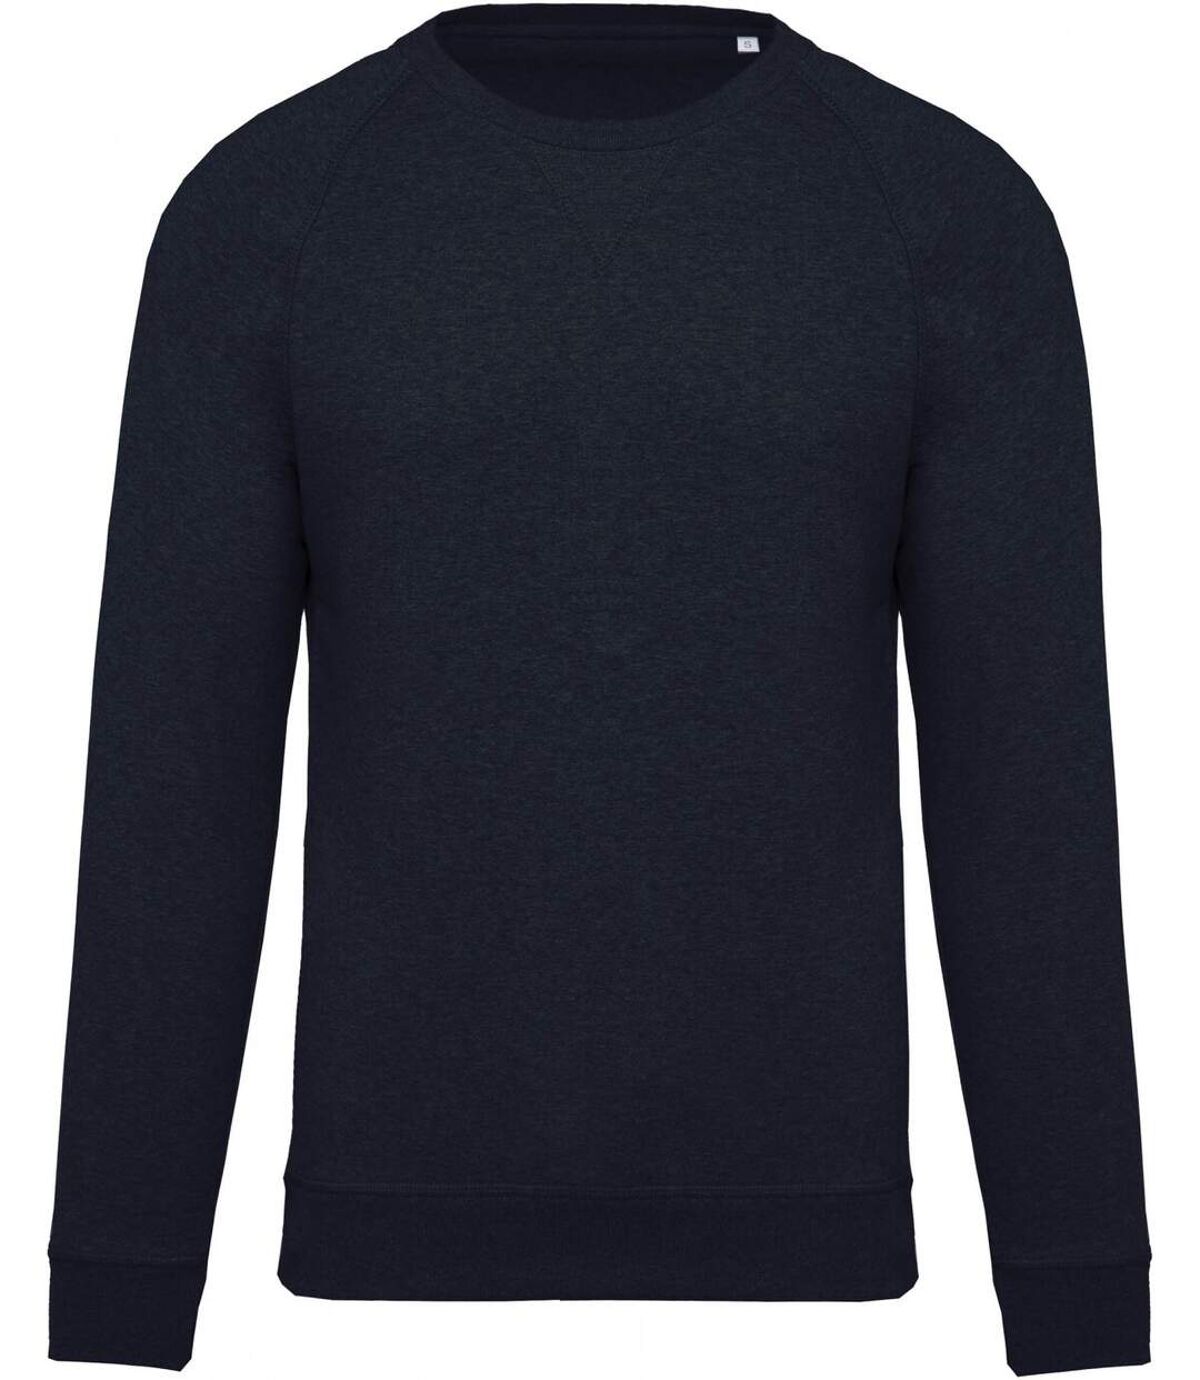 Sweat shirt coton bio - Homme - K480 - bleu marine chiné